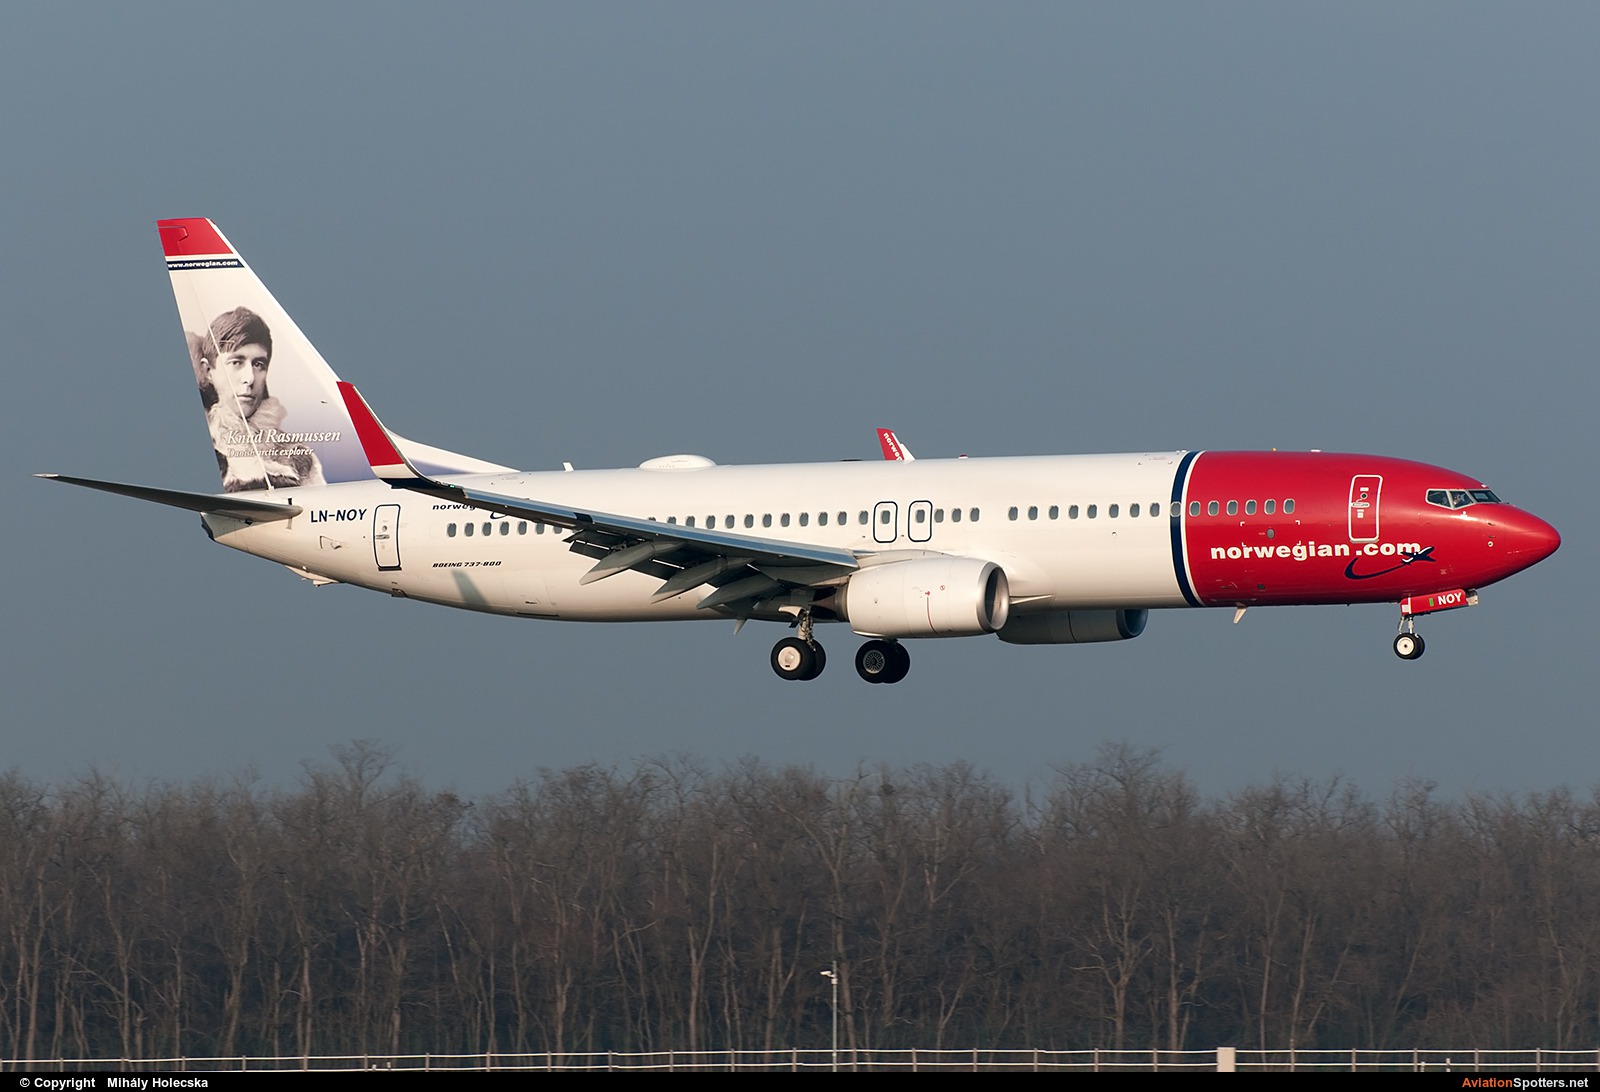 Norwegian Air Shuttle  -  737-800  (LN-NOY) By Mihály Holecska (Misixx)